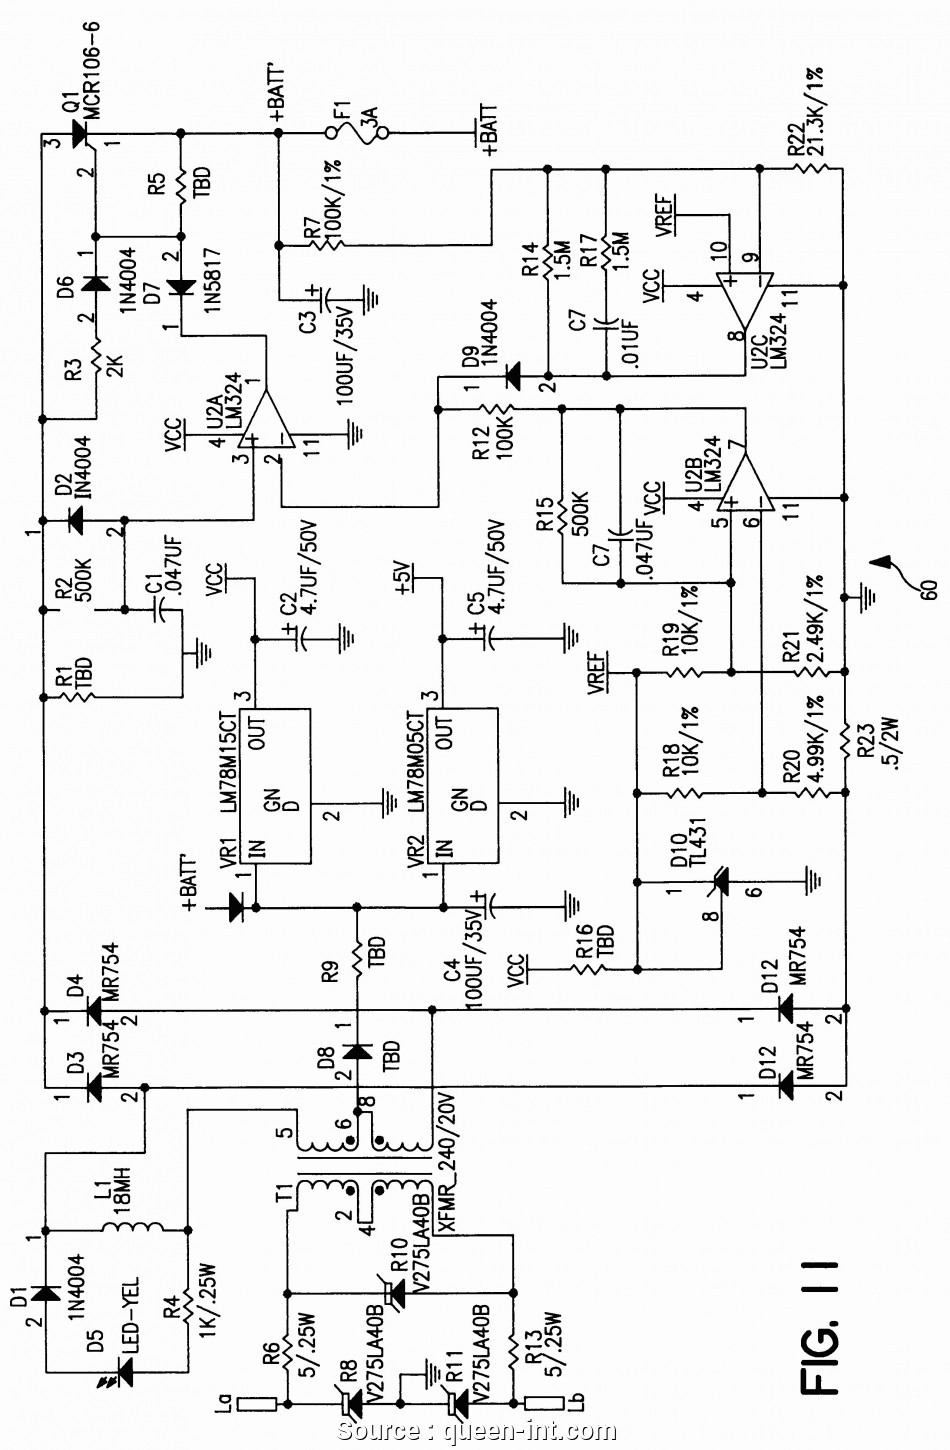 Reliance Transfer Switch Wiring Diagram | Manual E-Books - Reliance Generator Transfer Switch Wiring Diagram